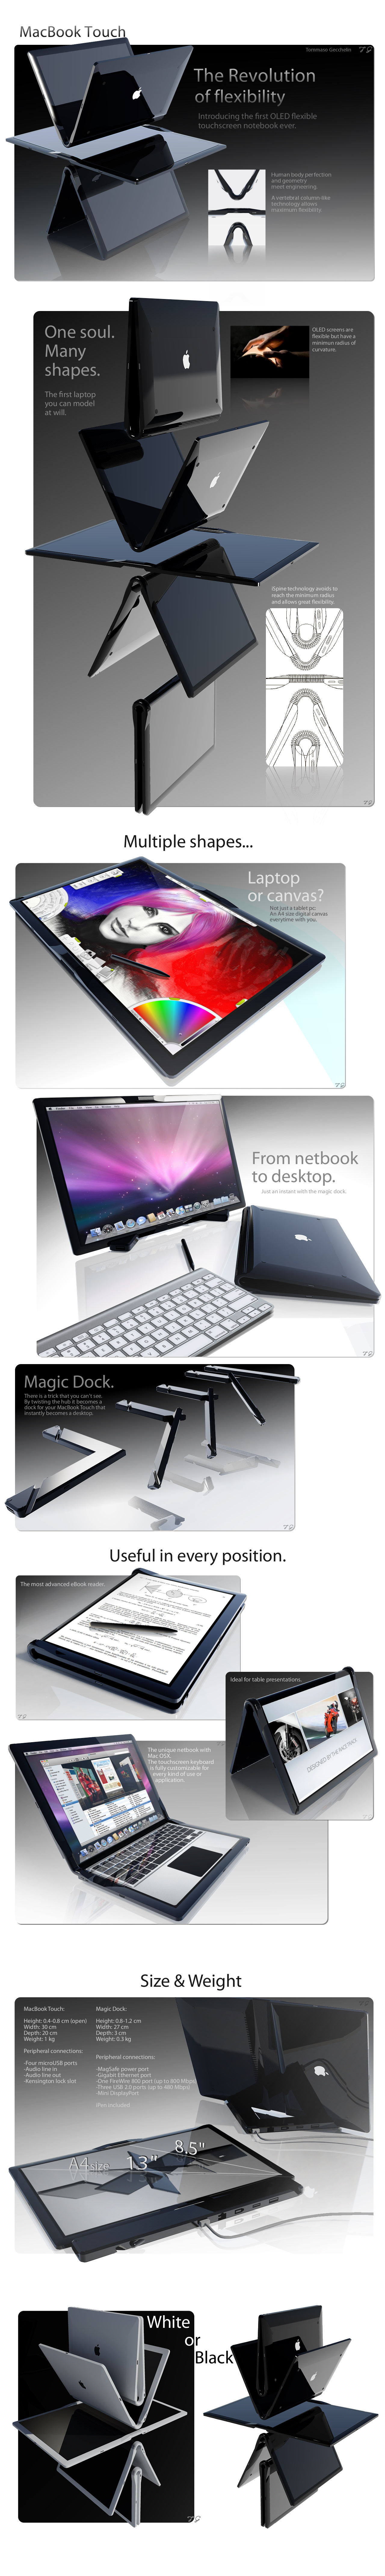 macbook-touch-beta-20.jpg